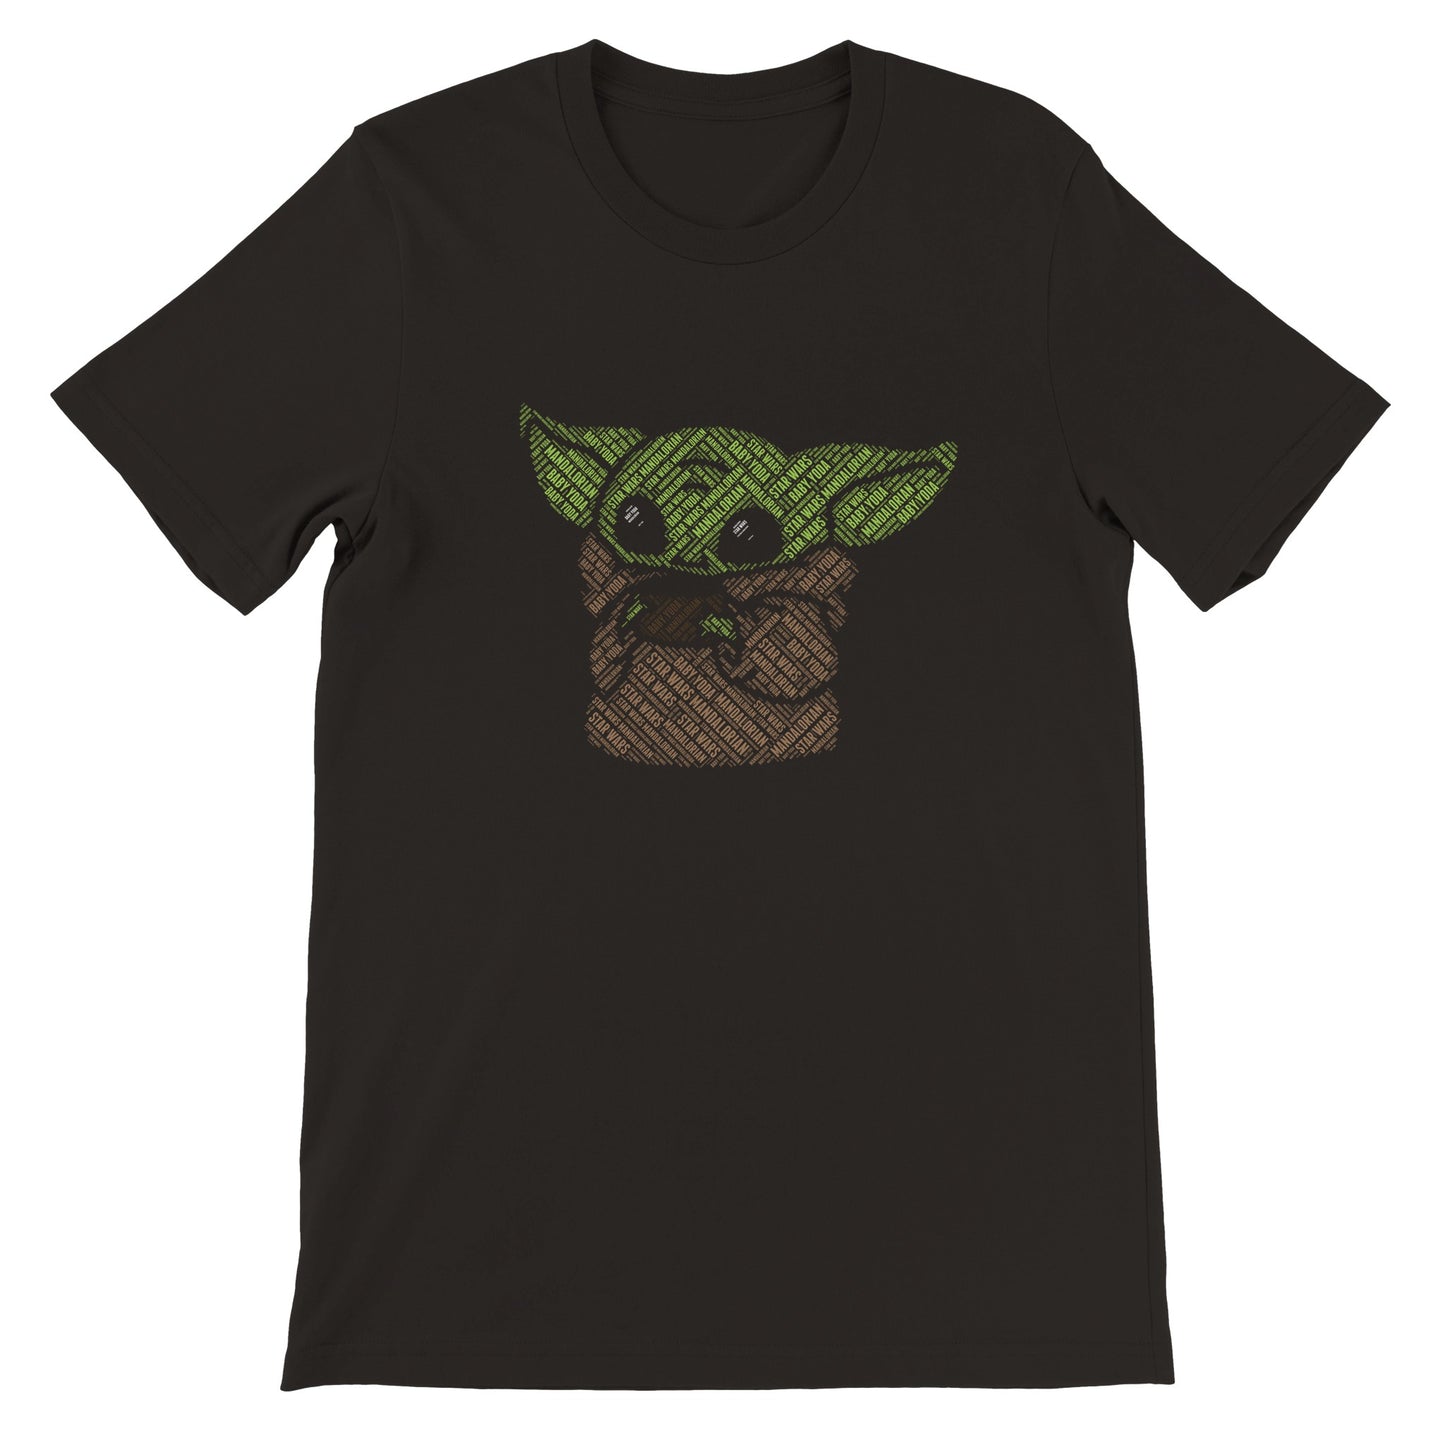 Artwork T-shirt - Baby Yoda Kalligram Artwork - Premium Unisex T-shirt